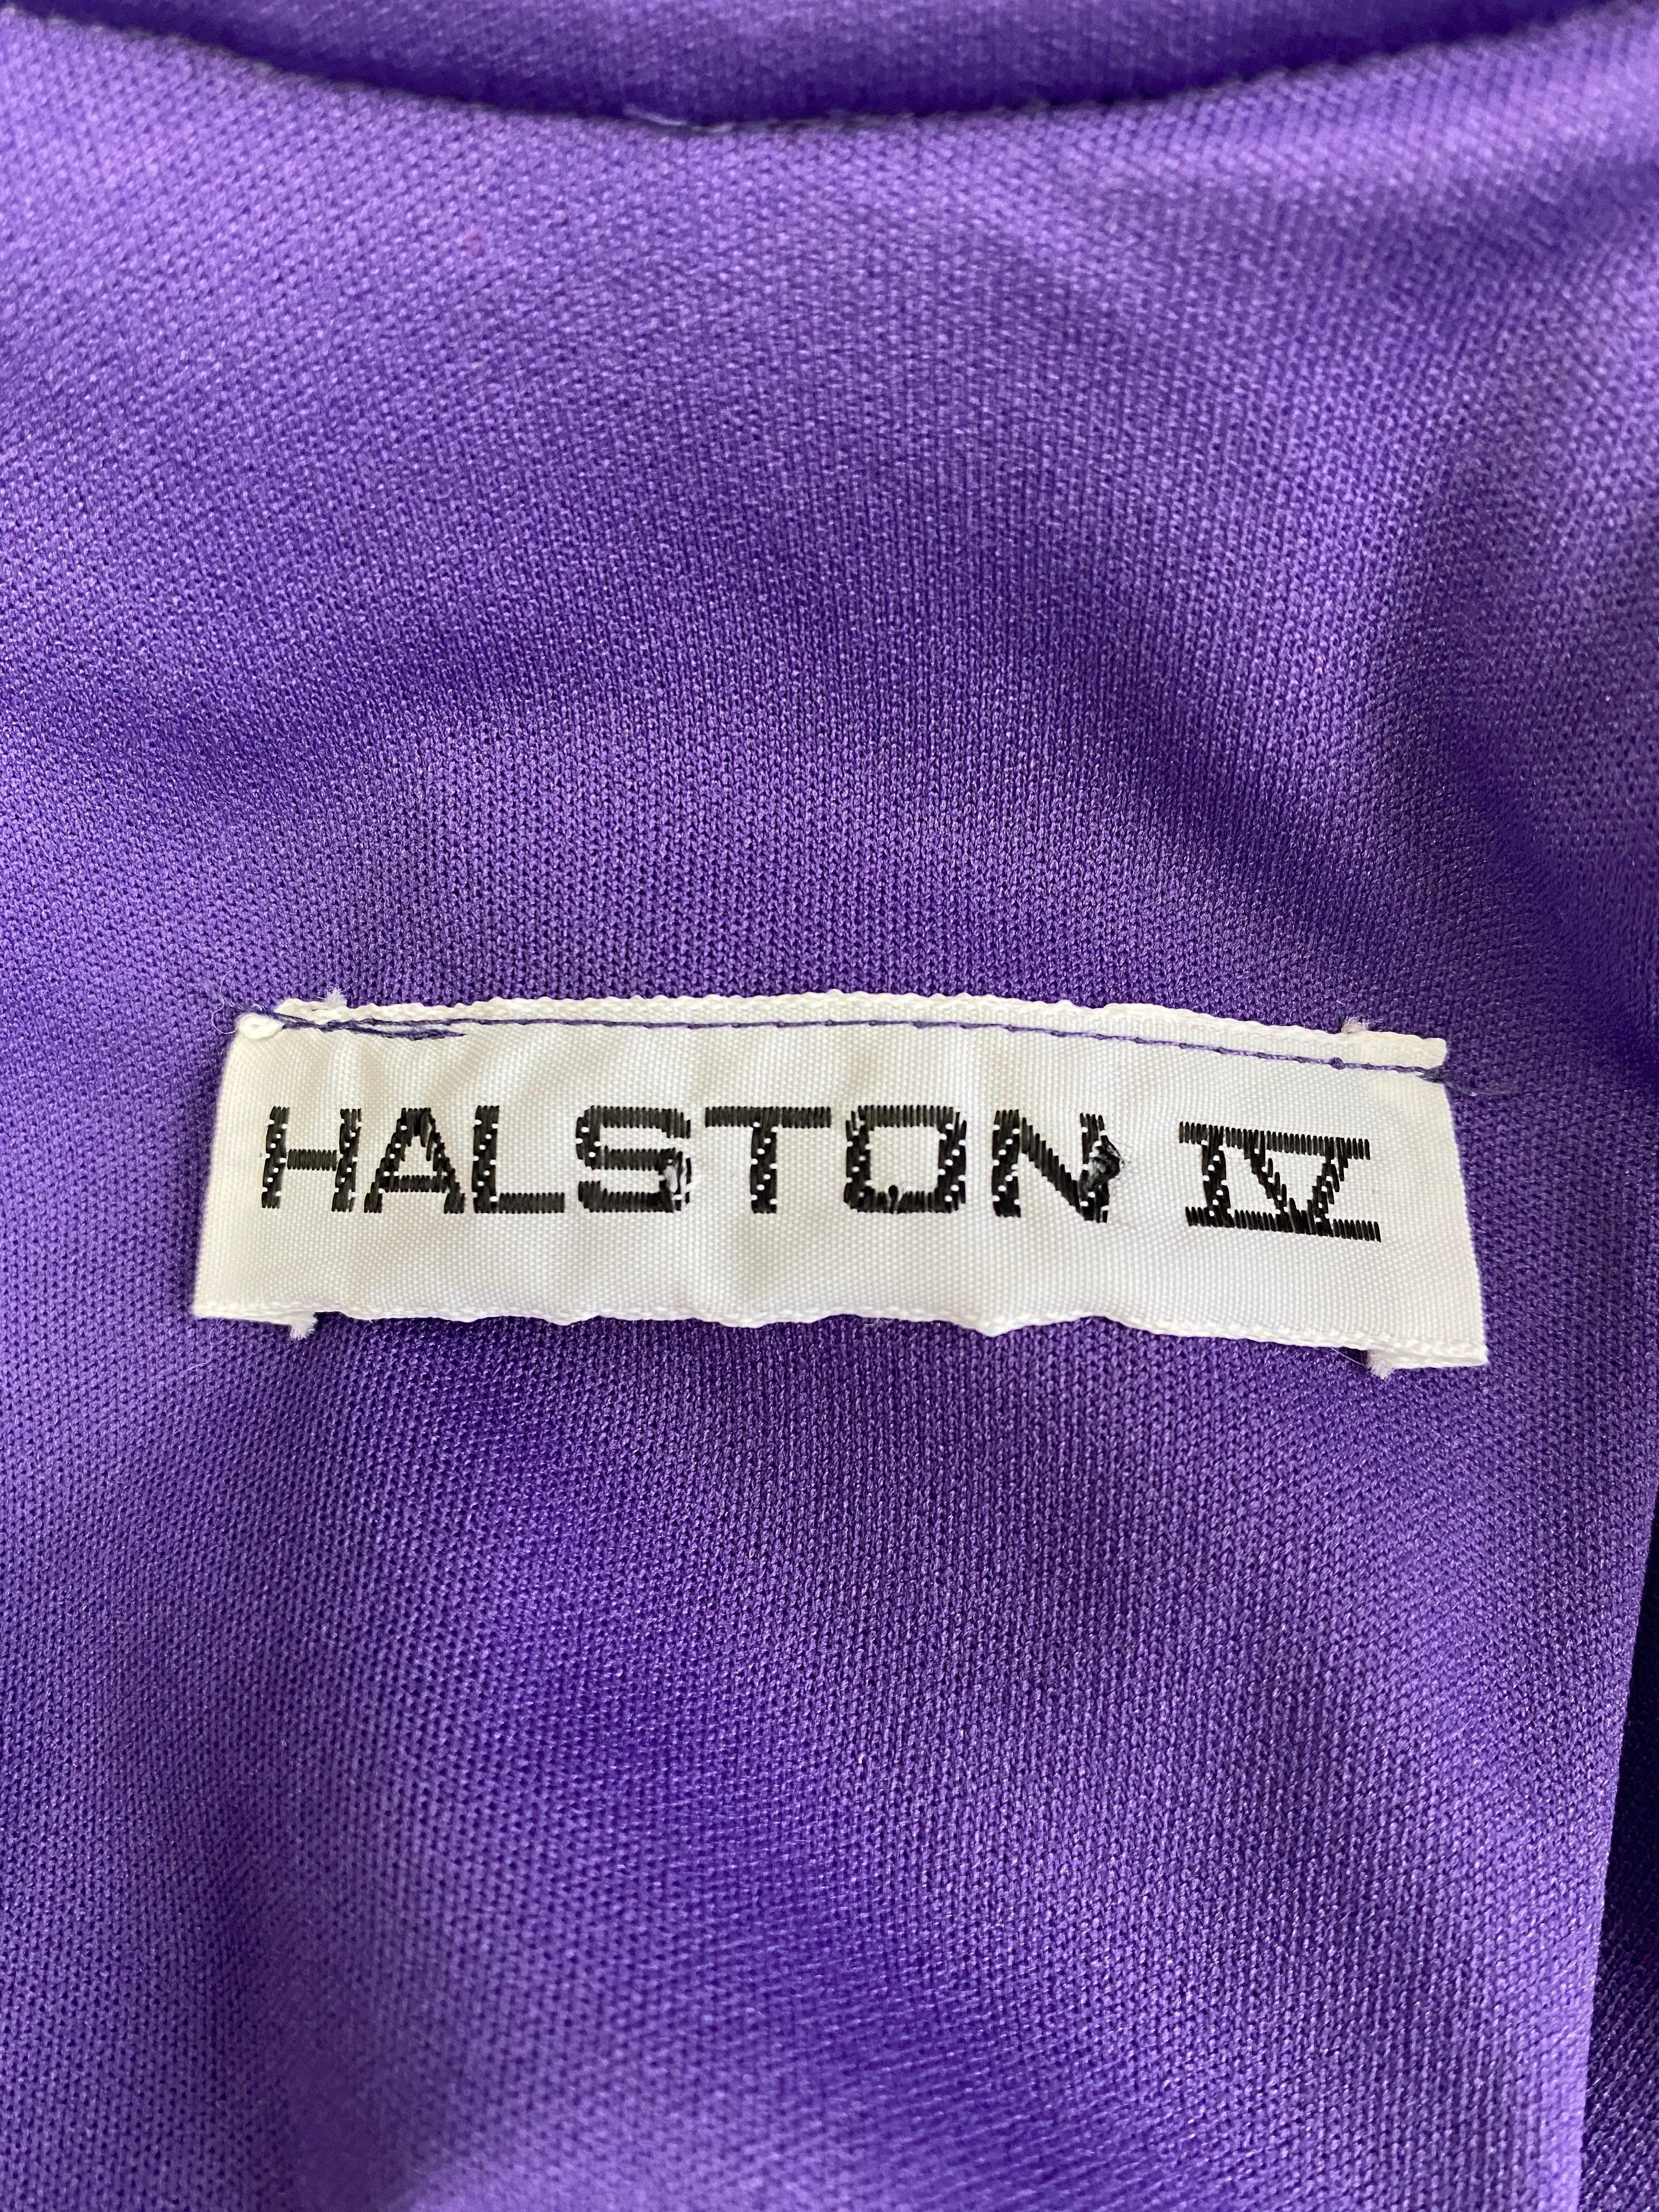 Early 1980’s Halston IV Purple Jersey Knit Caftan  For Sale 5